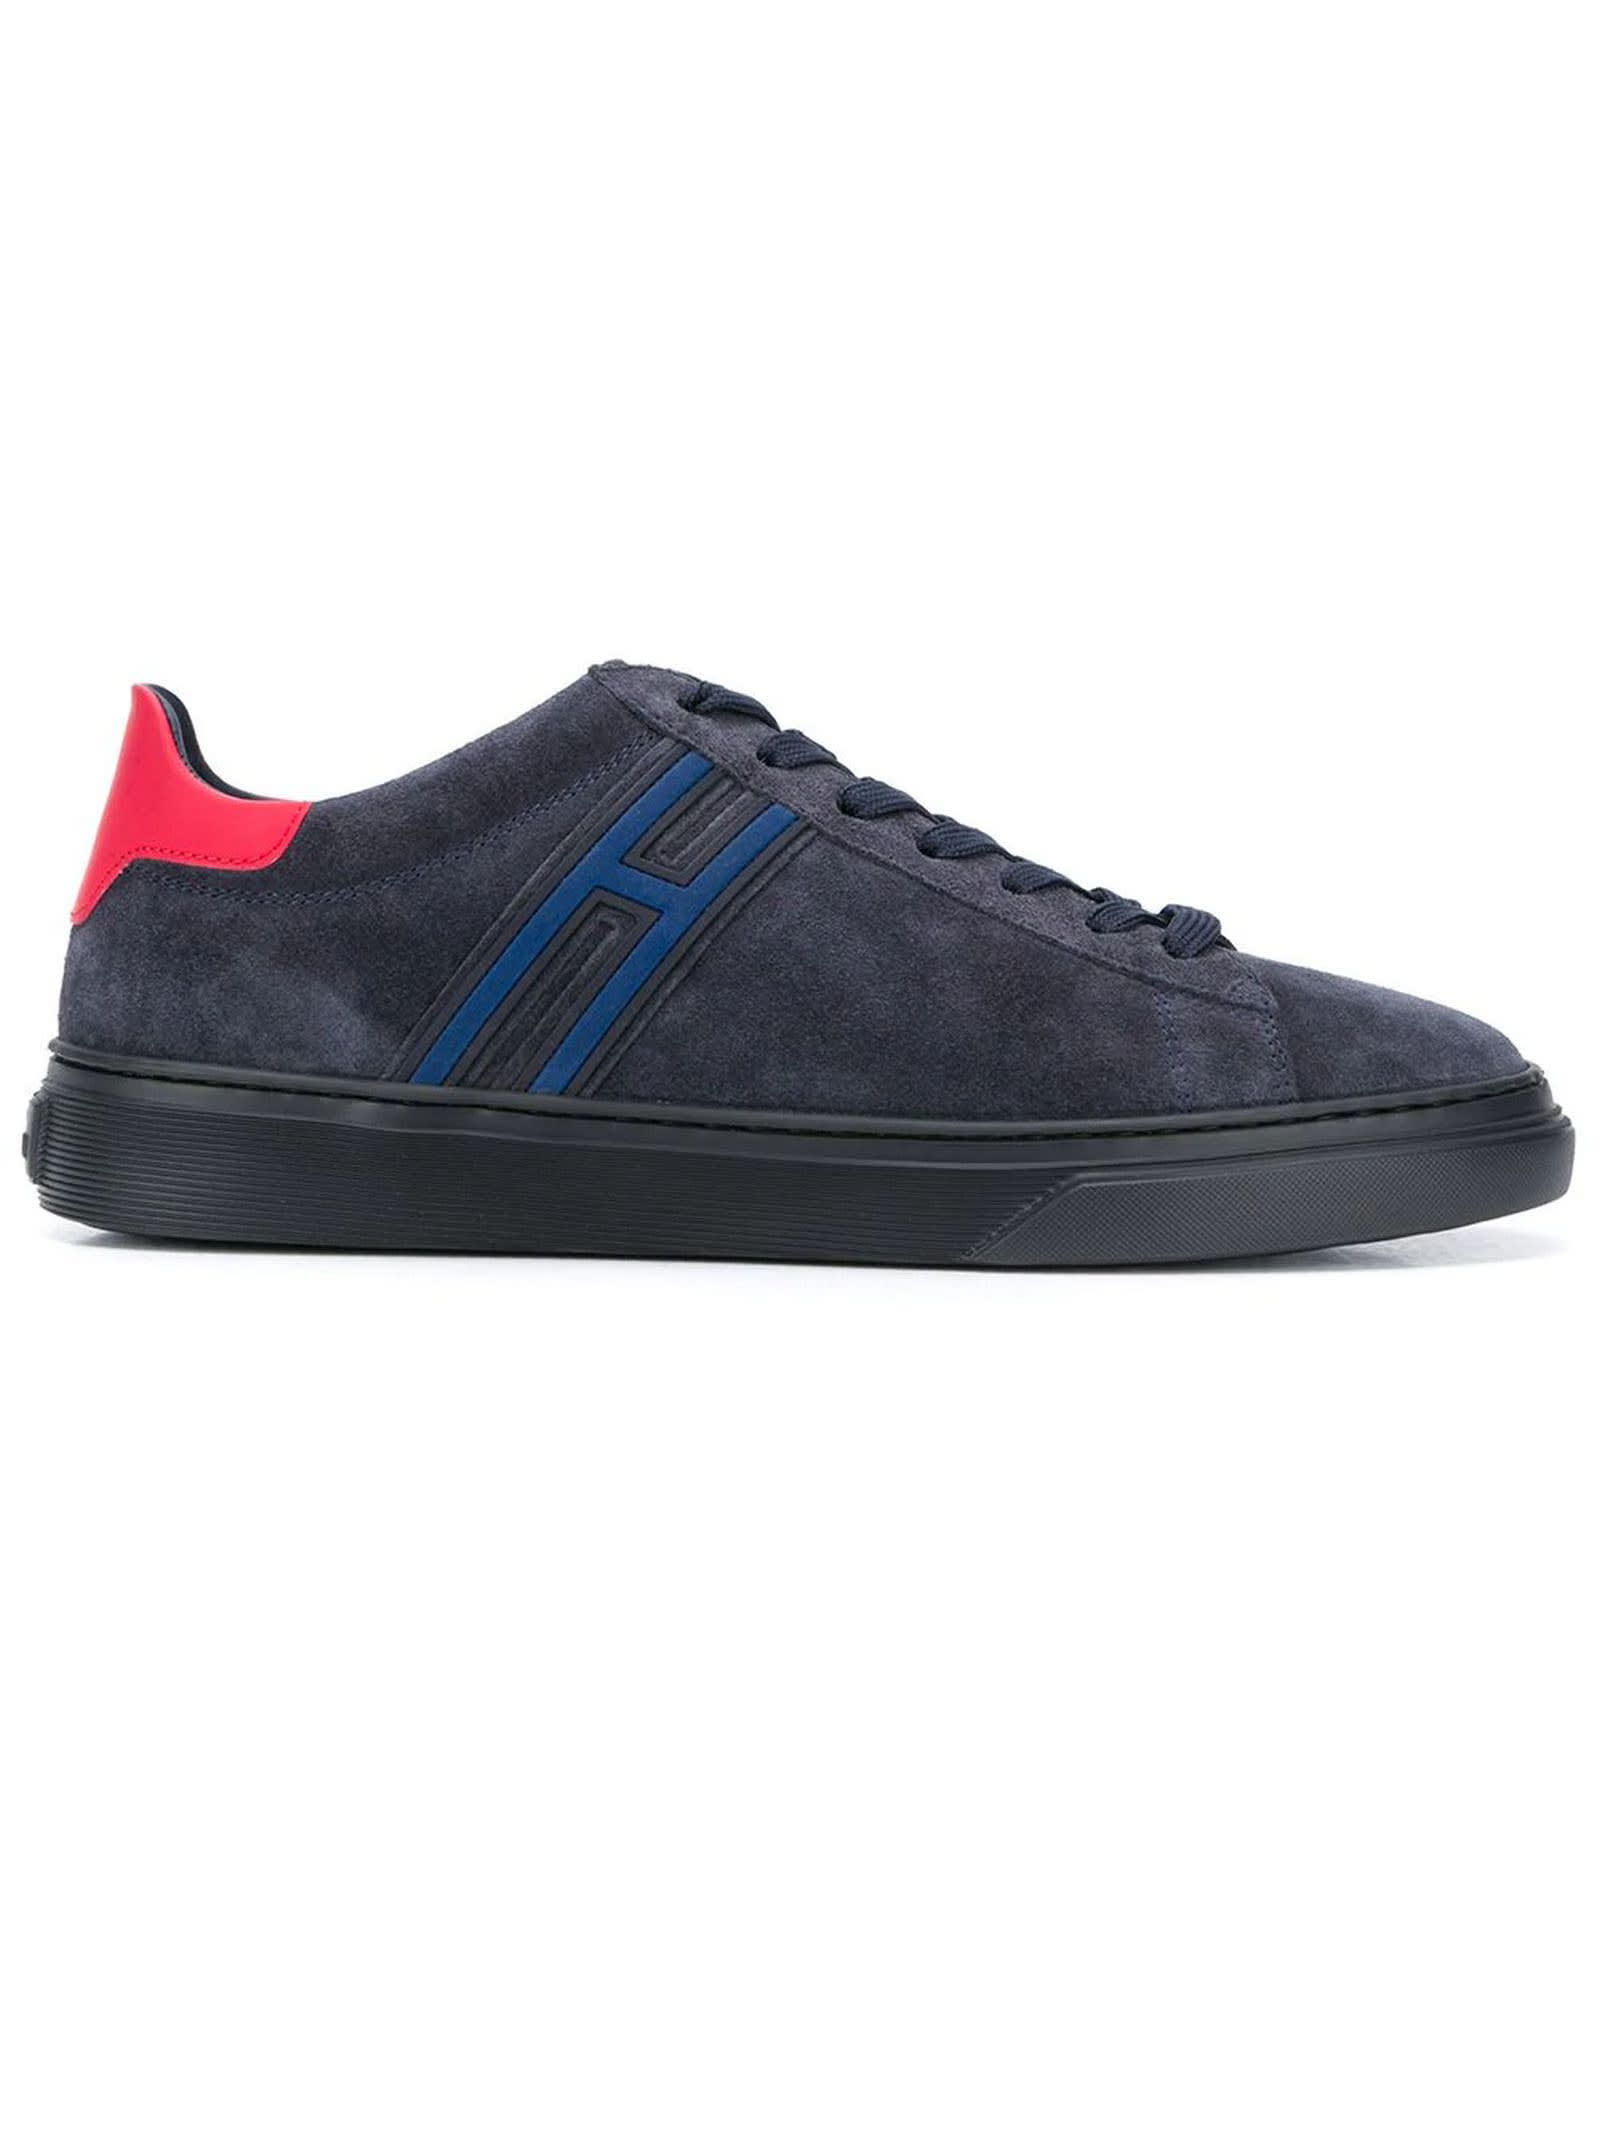 Hogan Sneakers H365 Blue, Red